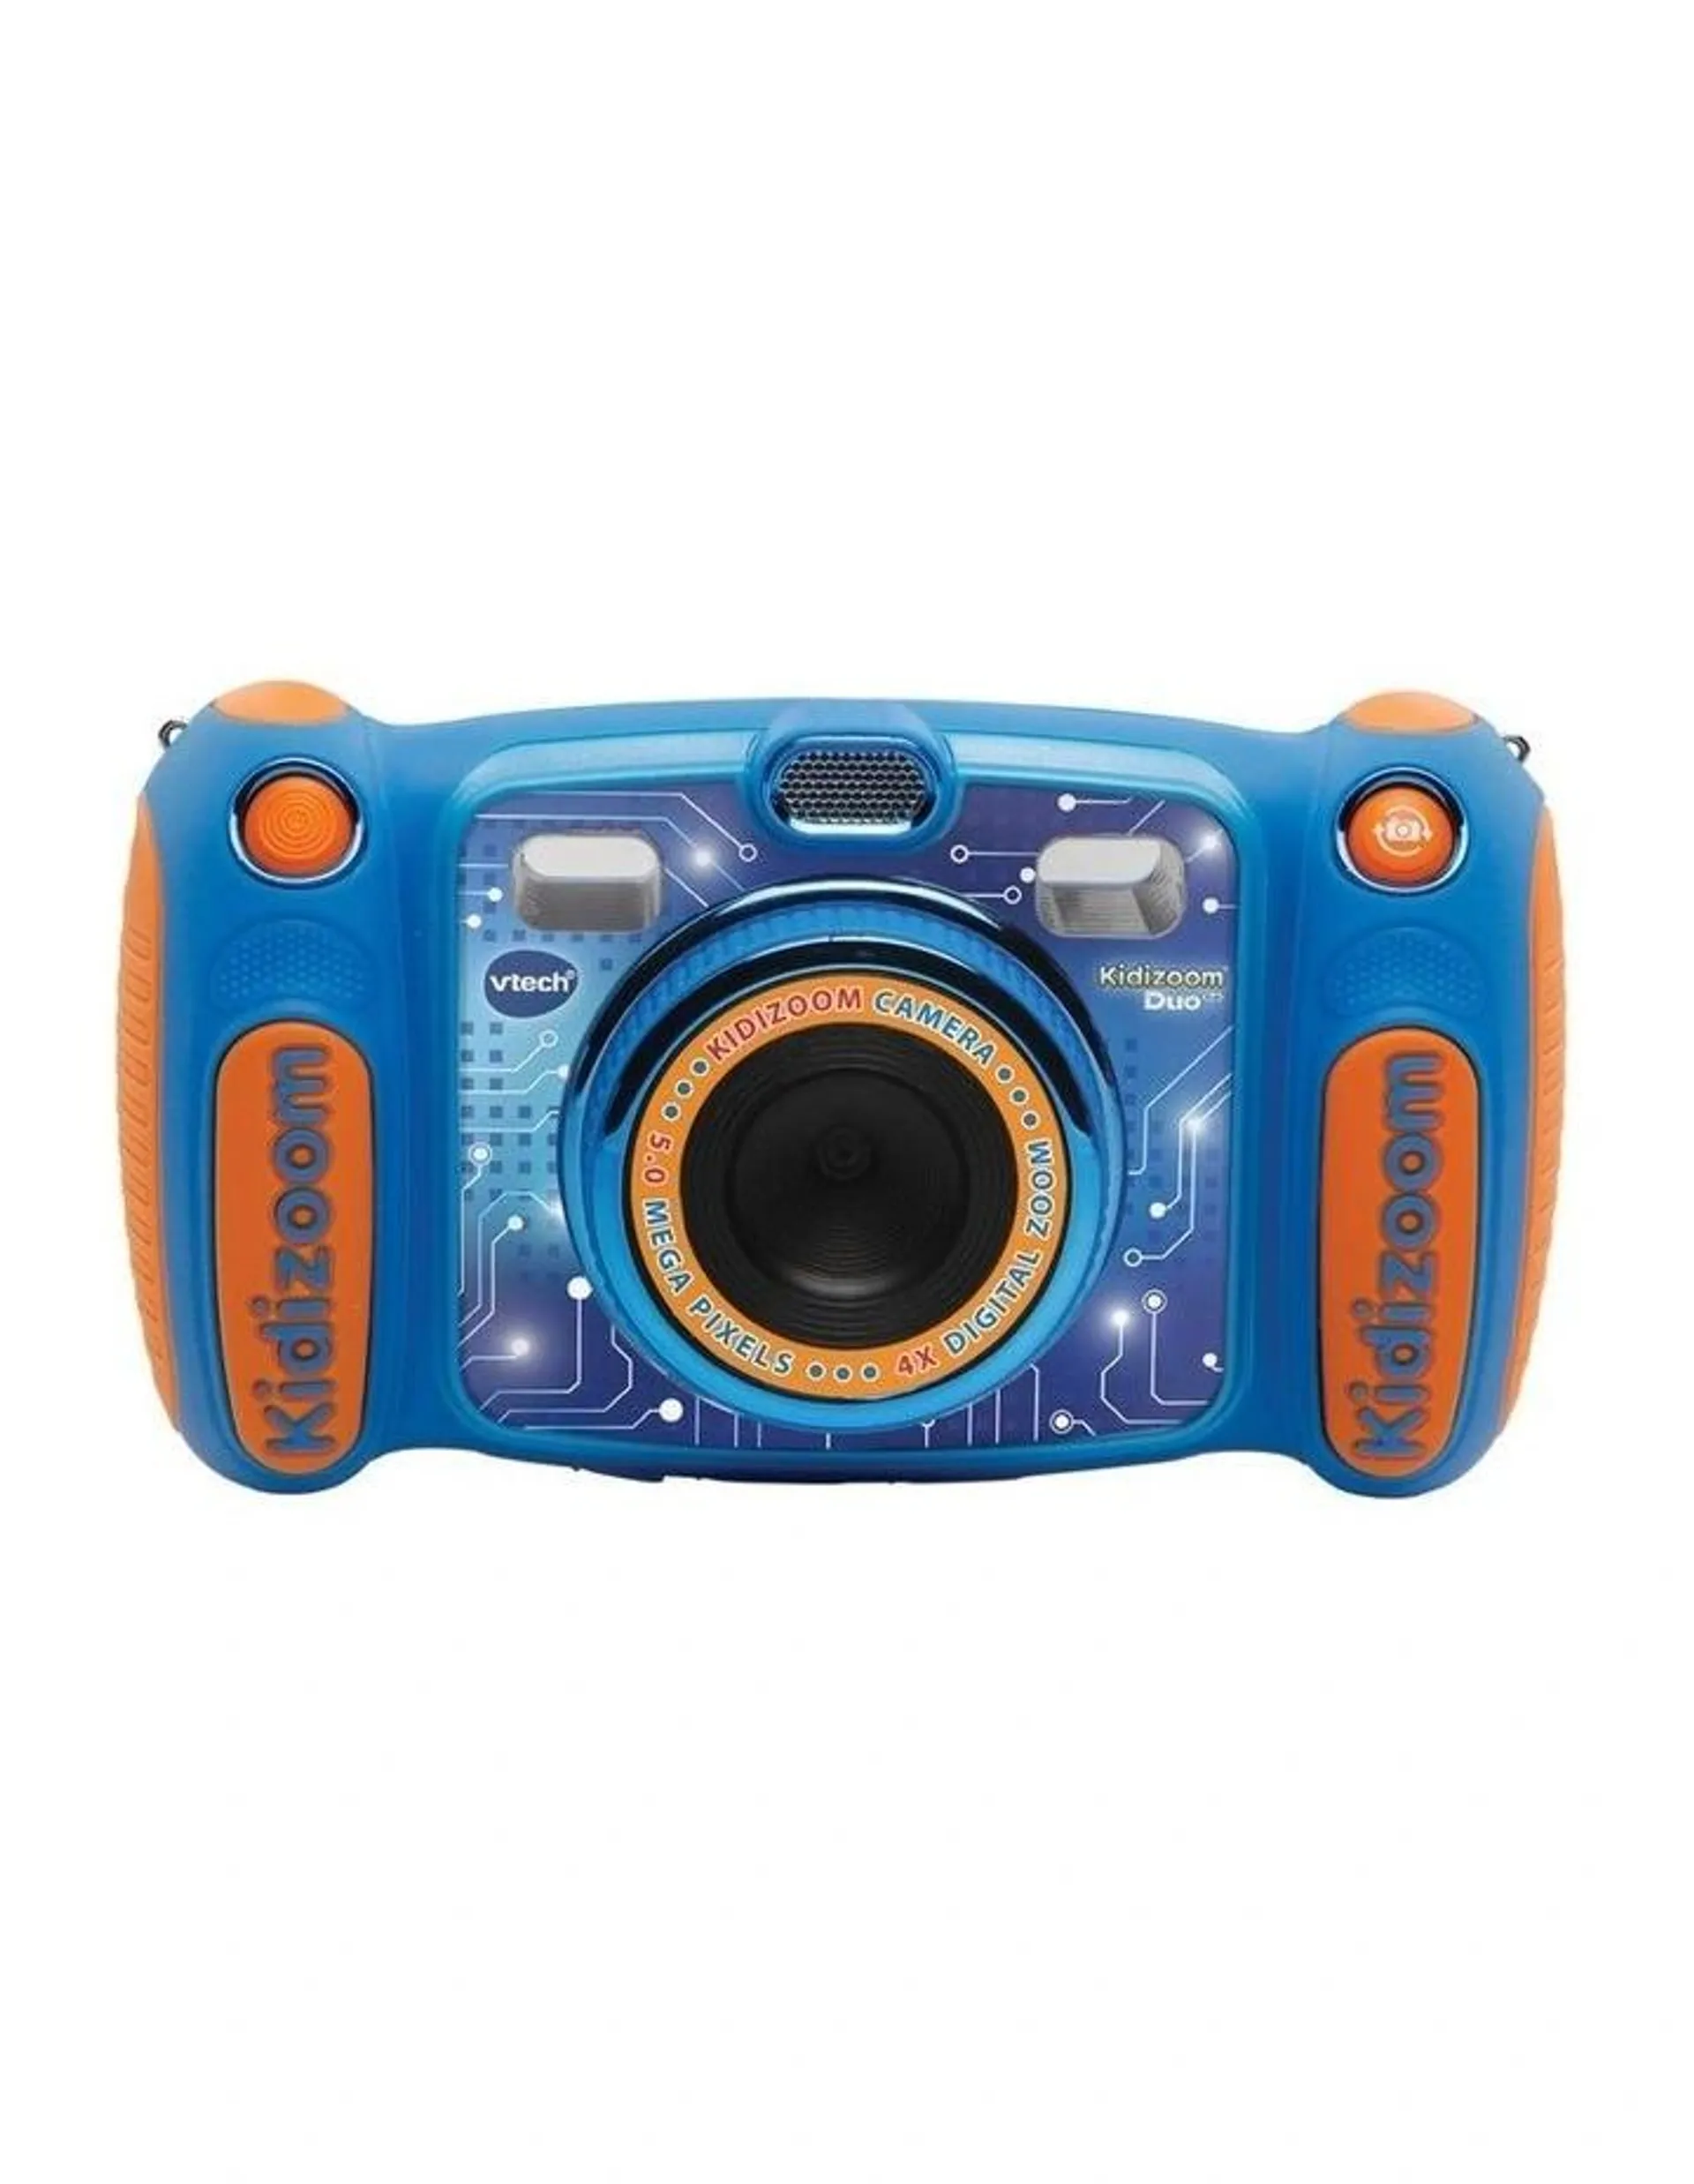 Kidizoom Duo 5.0 Camera in Blue